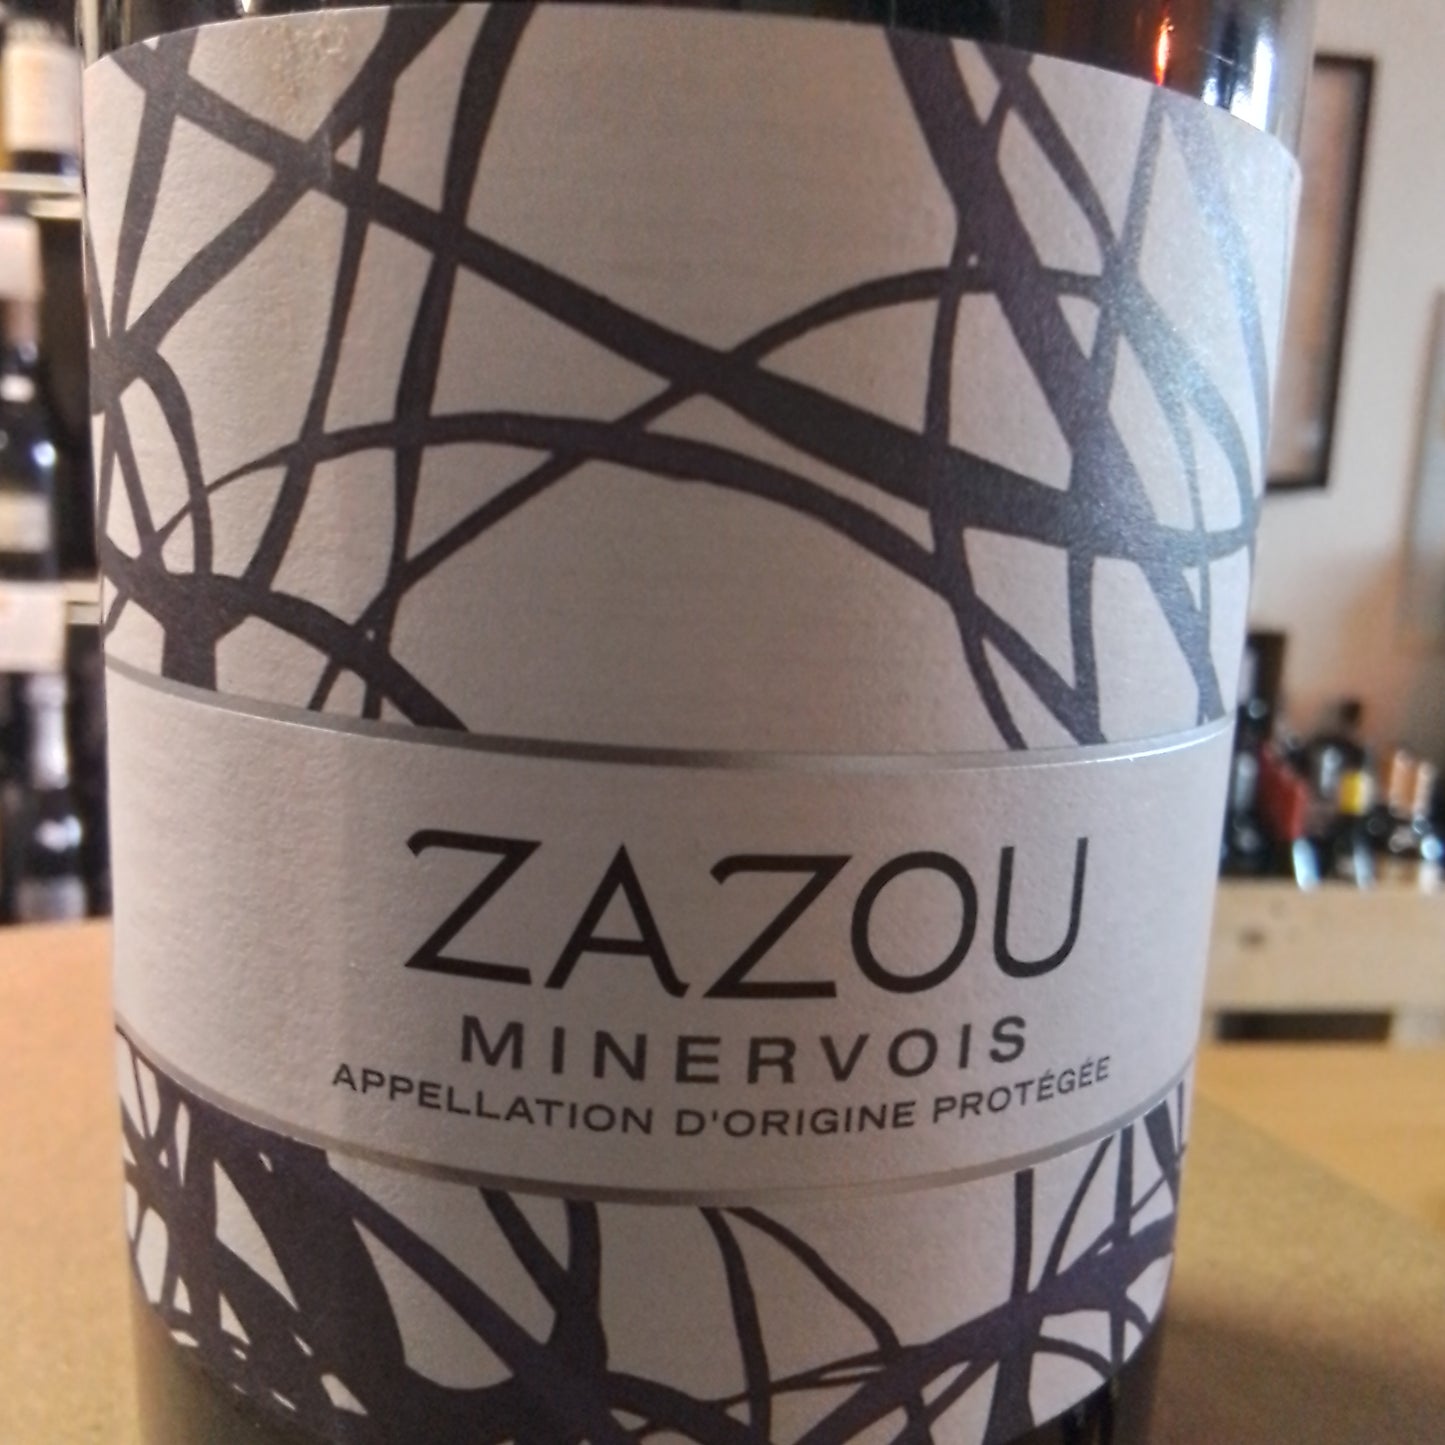 ZAZOU NV Red Blend 'Minervois' (Languedoc-Roussillon, France)